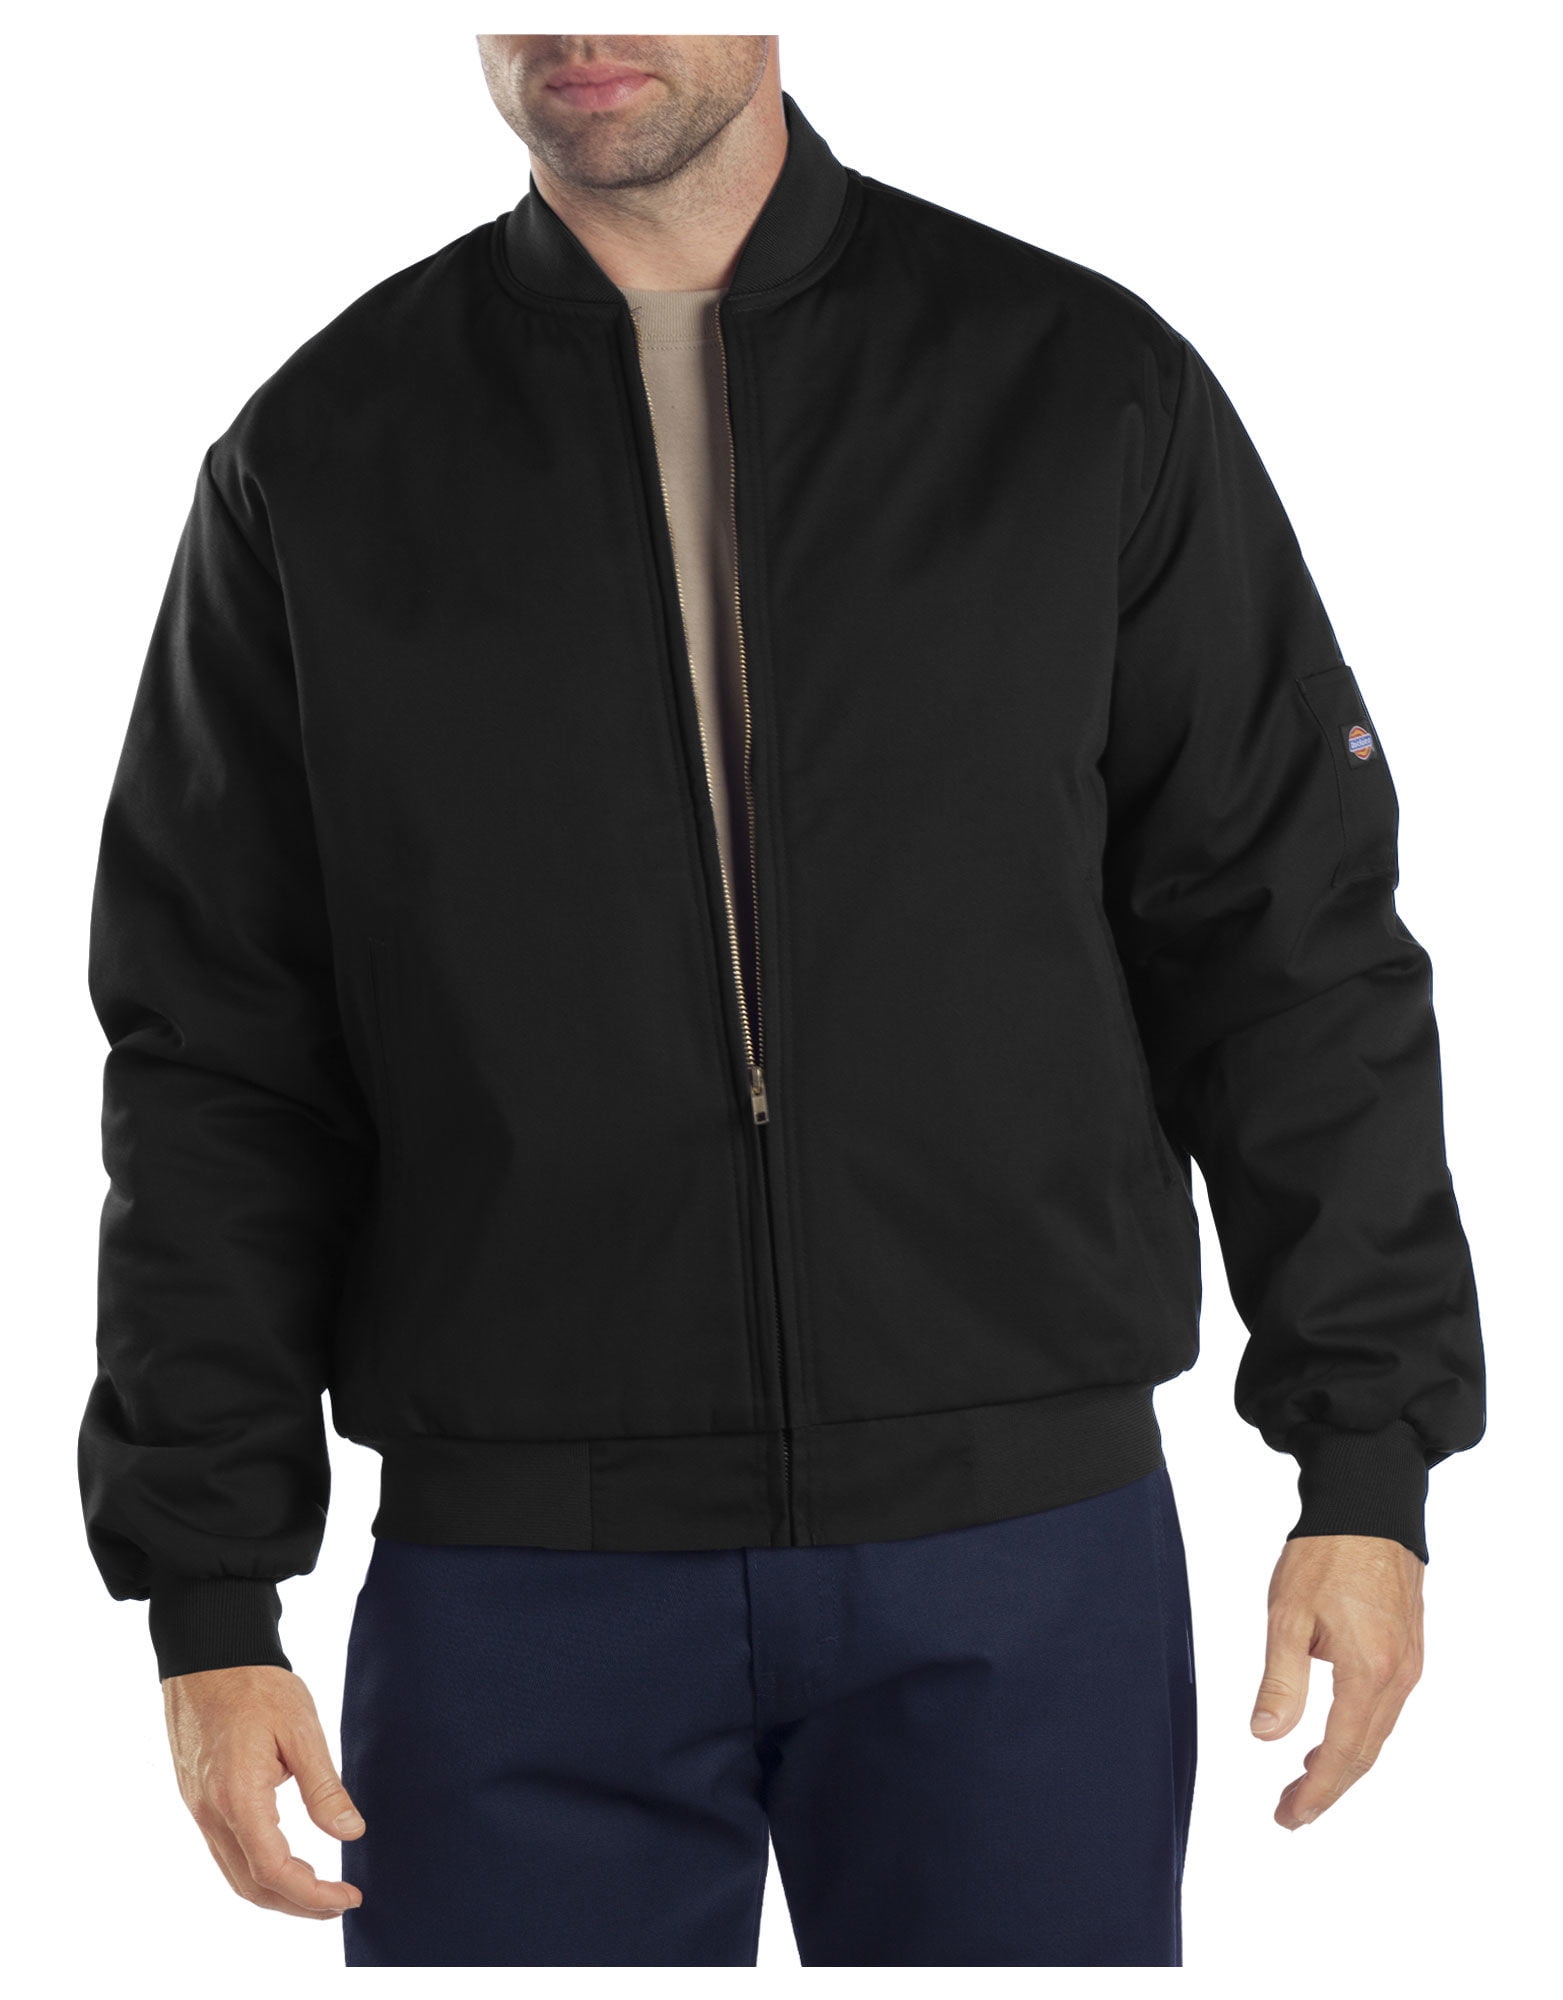 dickies mens the insulated team bomber jacket - Walmart.com